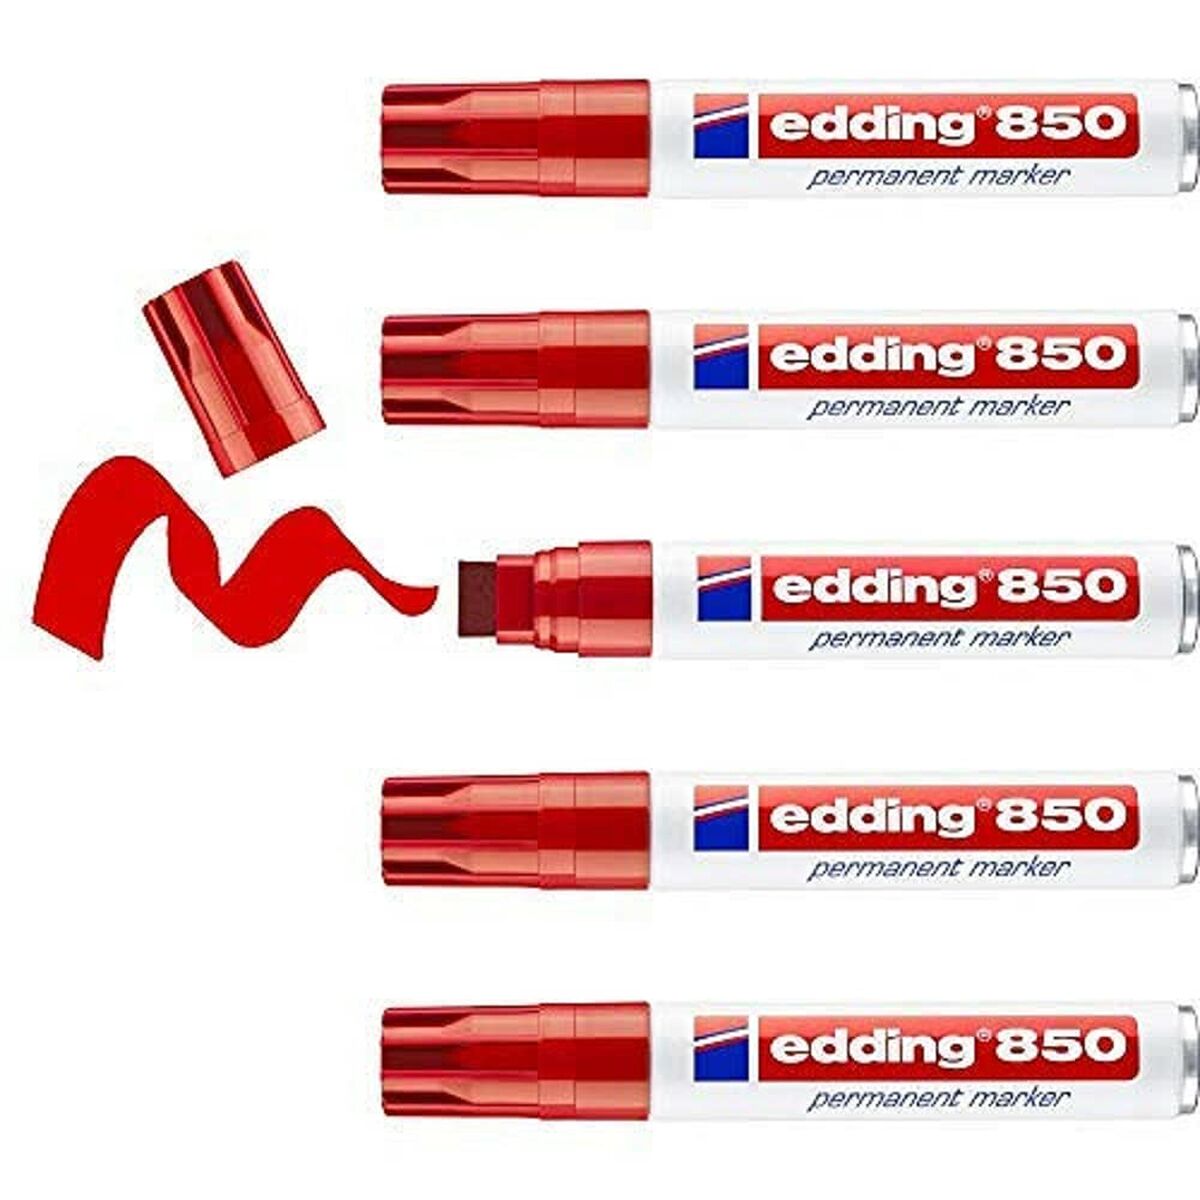 Permanent marker Edding 850 Red 5 Units